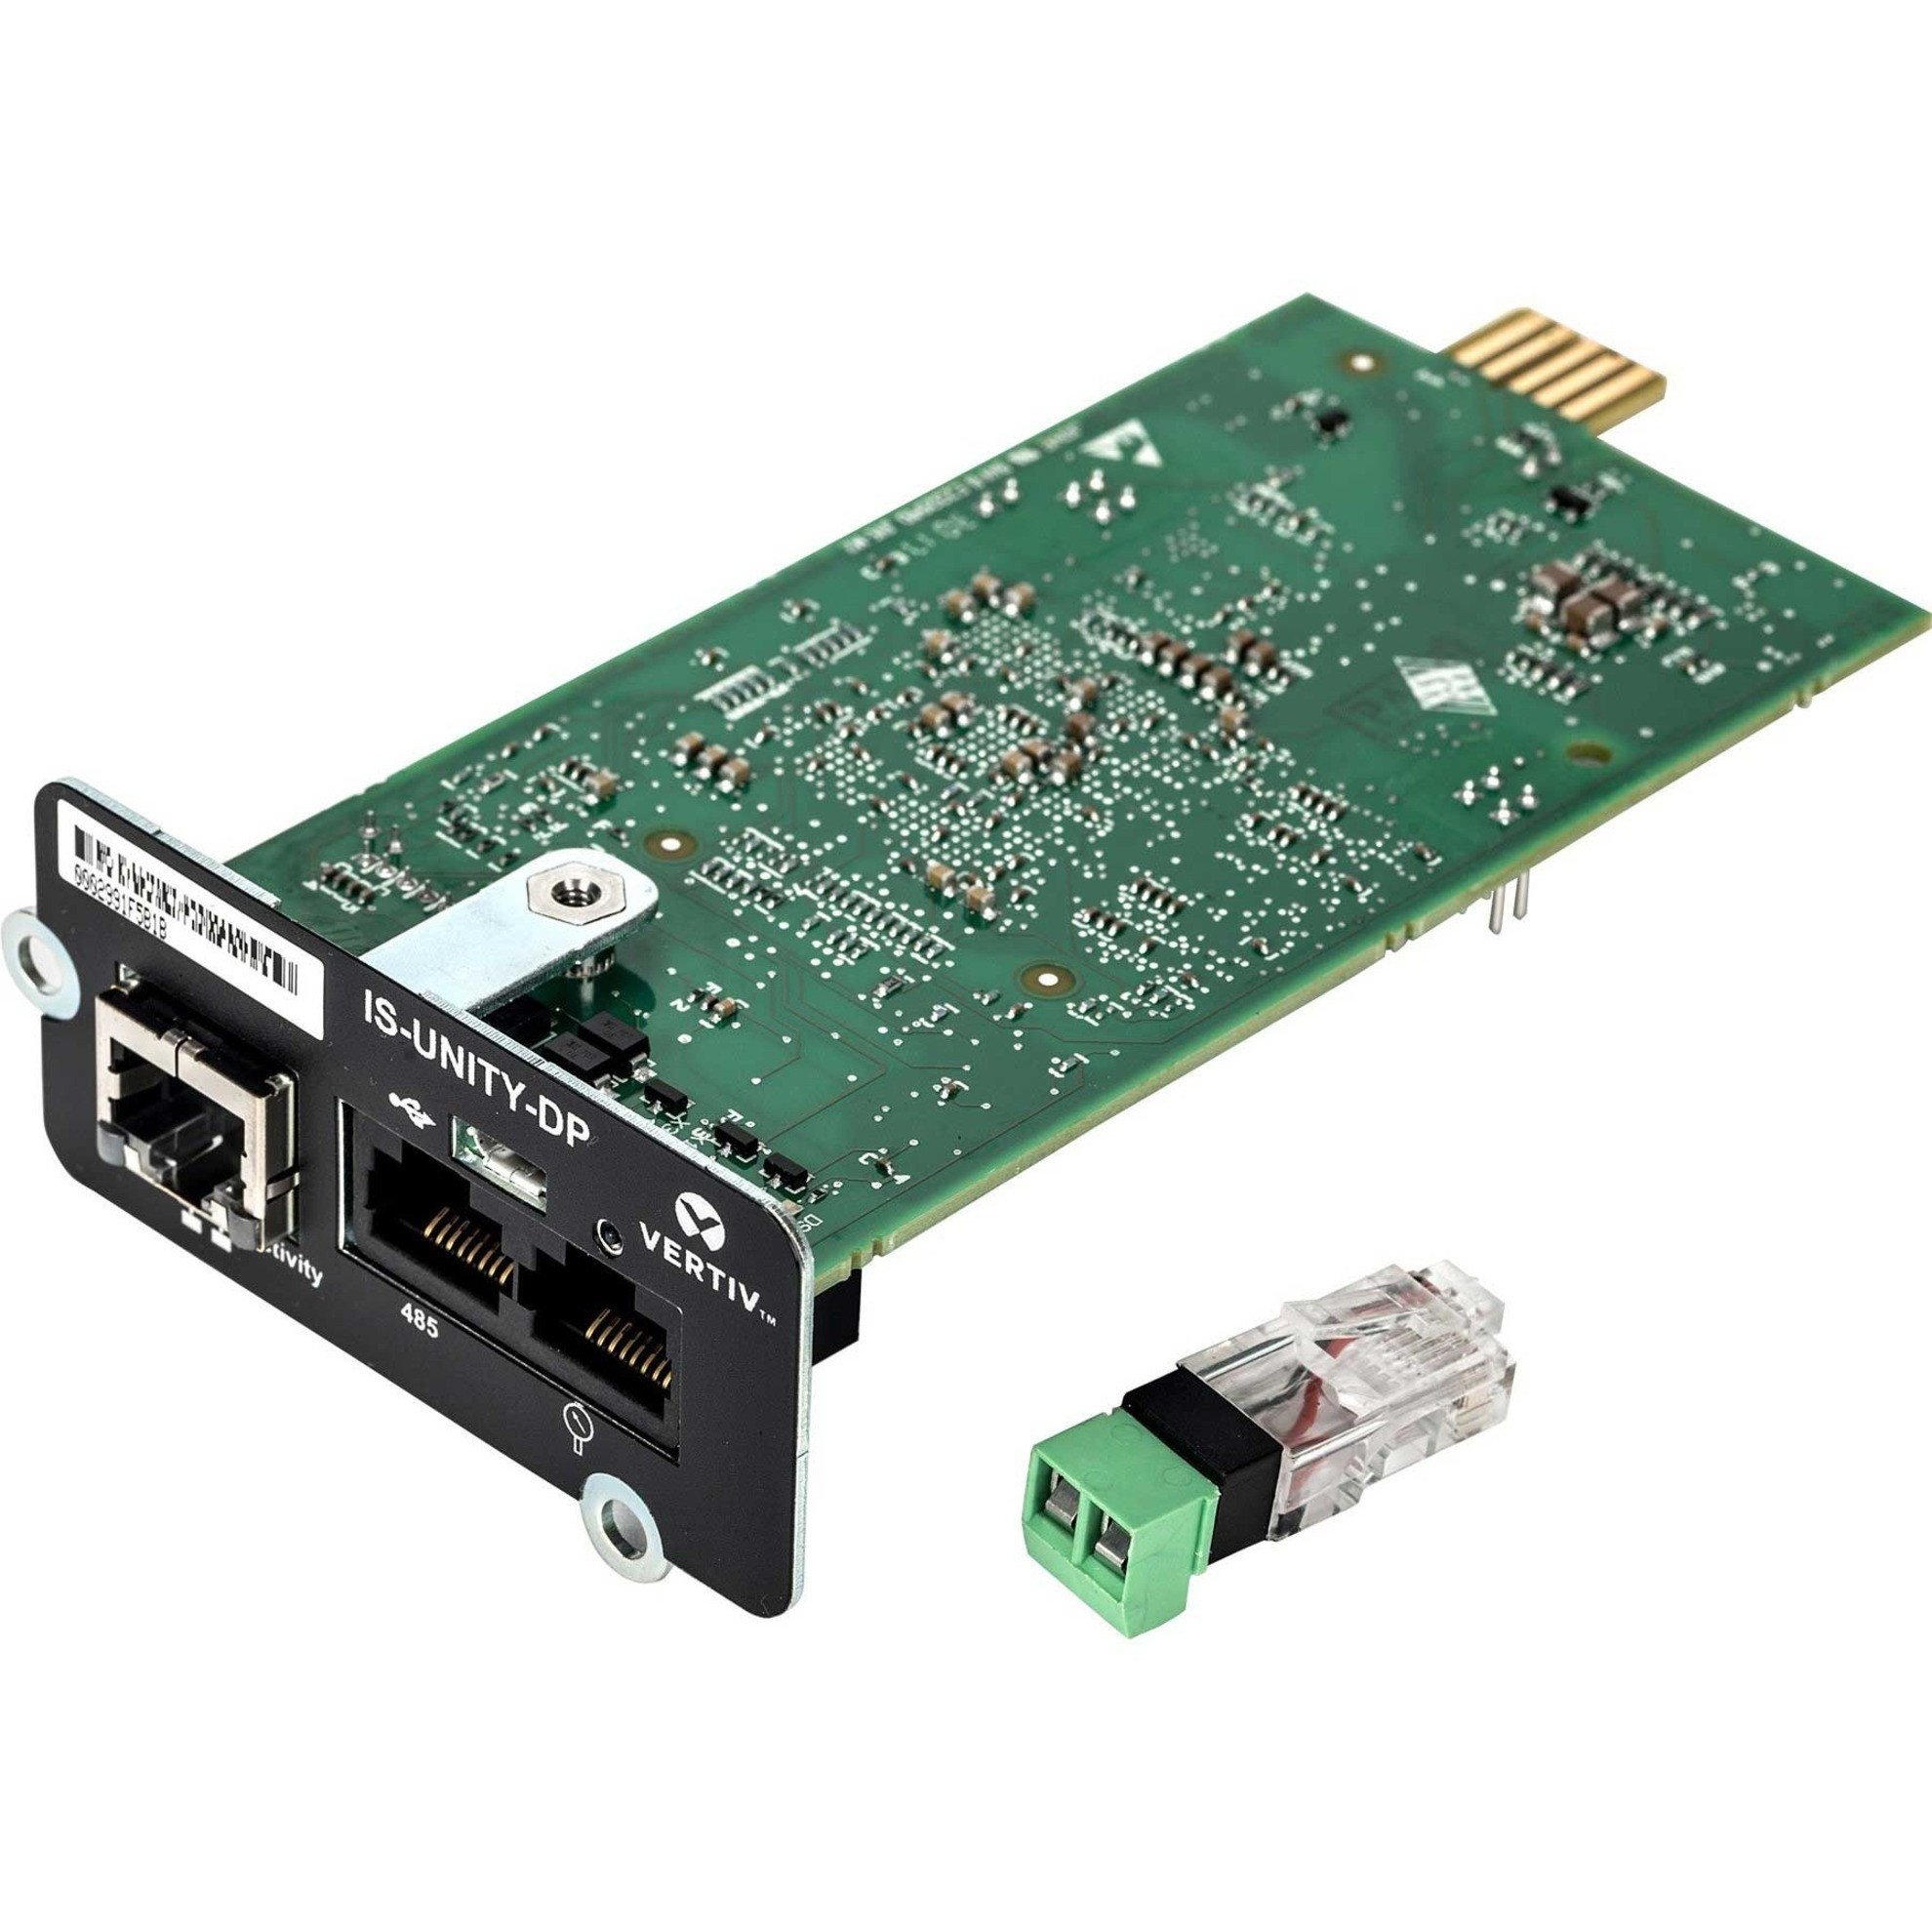 Vertiv Liebert IntelliSlot Unity-DP-Network CardRemote Monitoring|Dual ProtocolData Center Monitoring| Adapter| 10Mb LAN/100Mb LAN| RS… IS-UNITY-DP